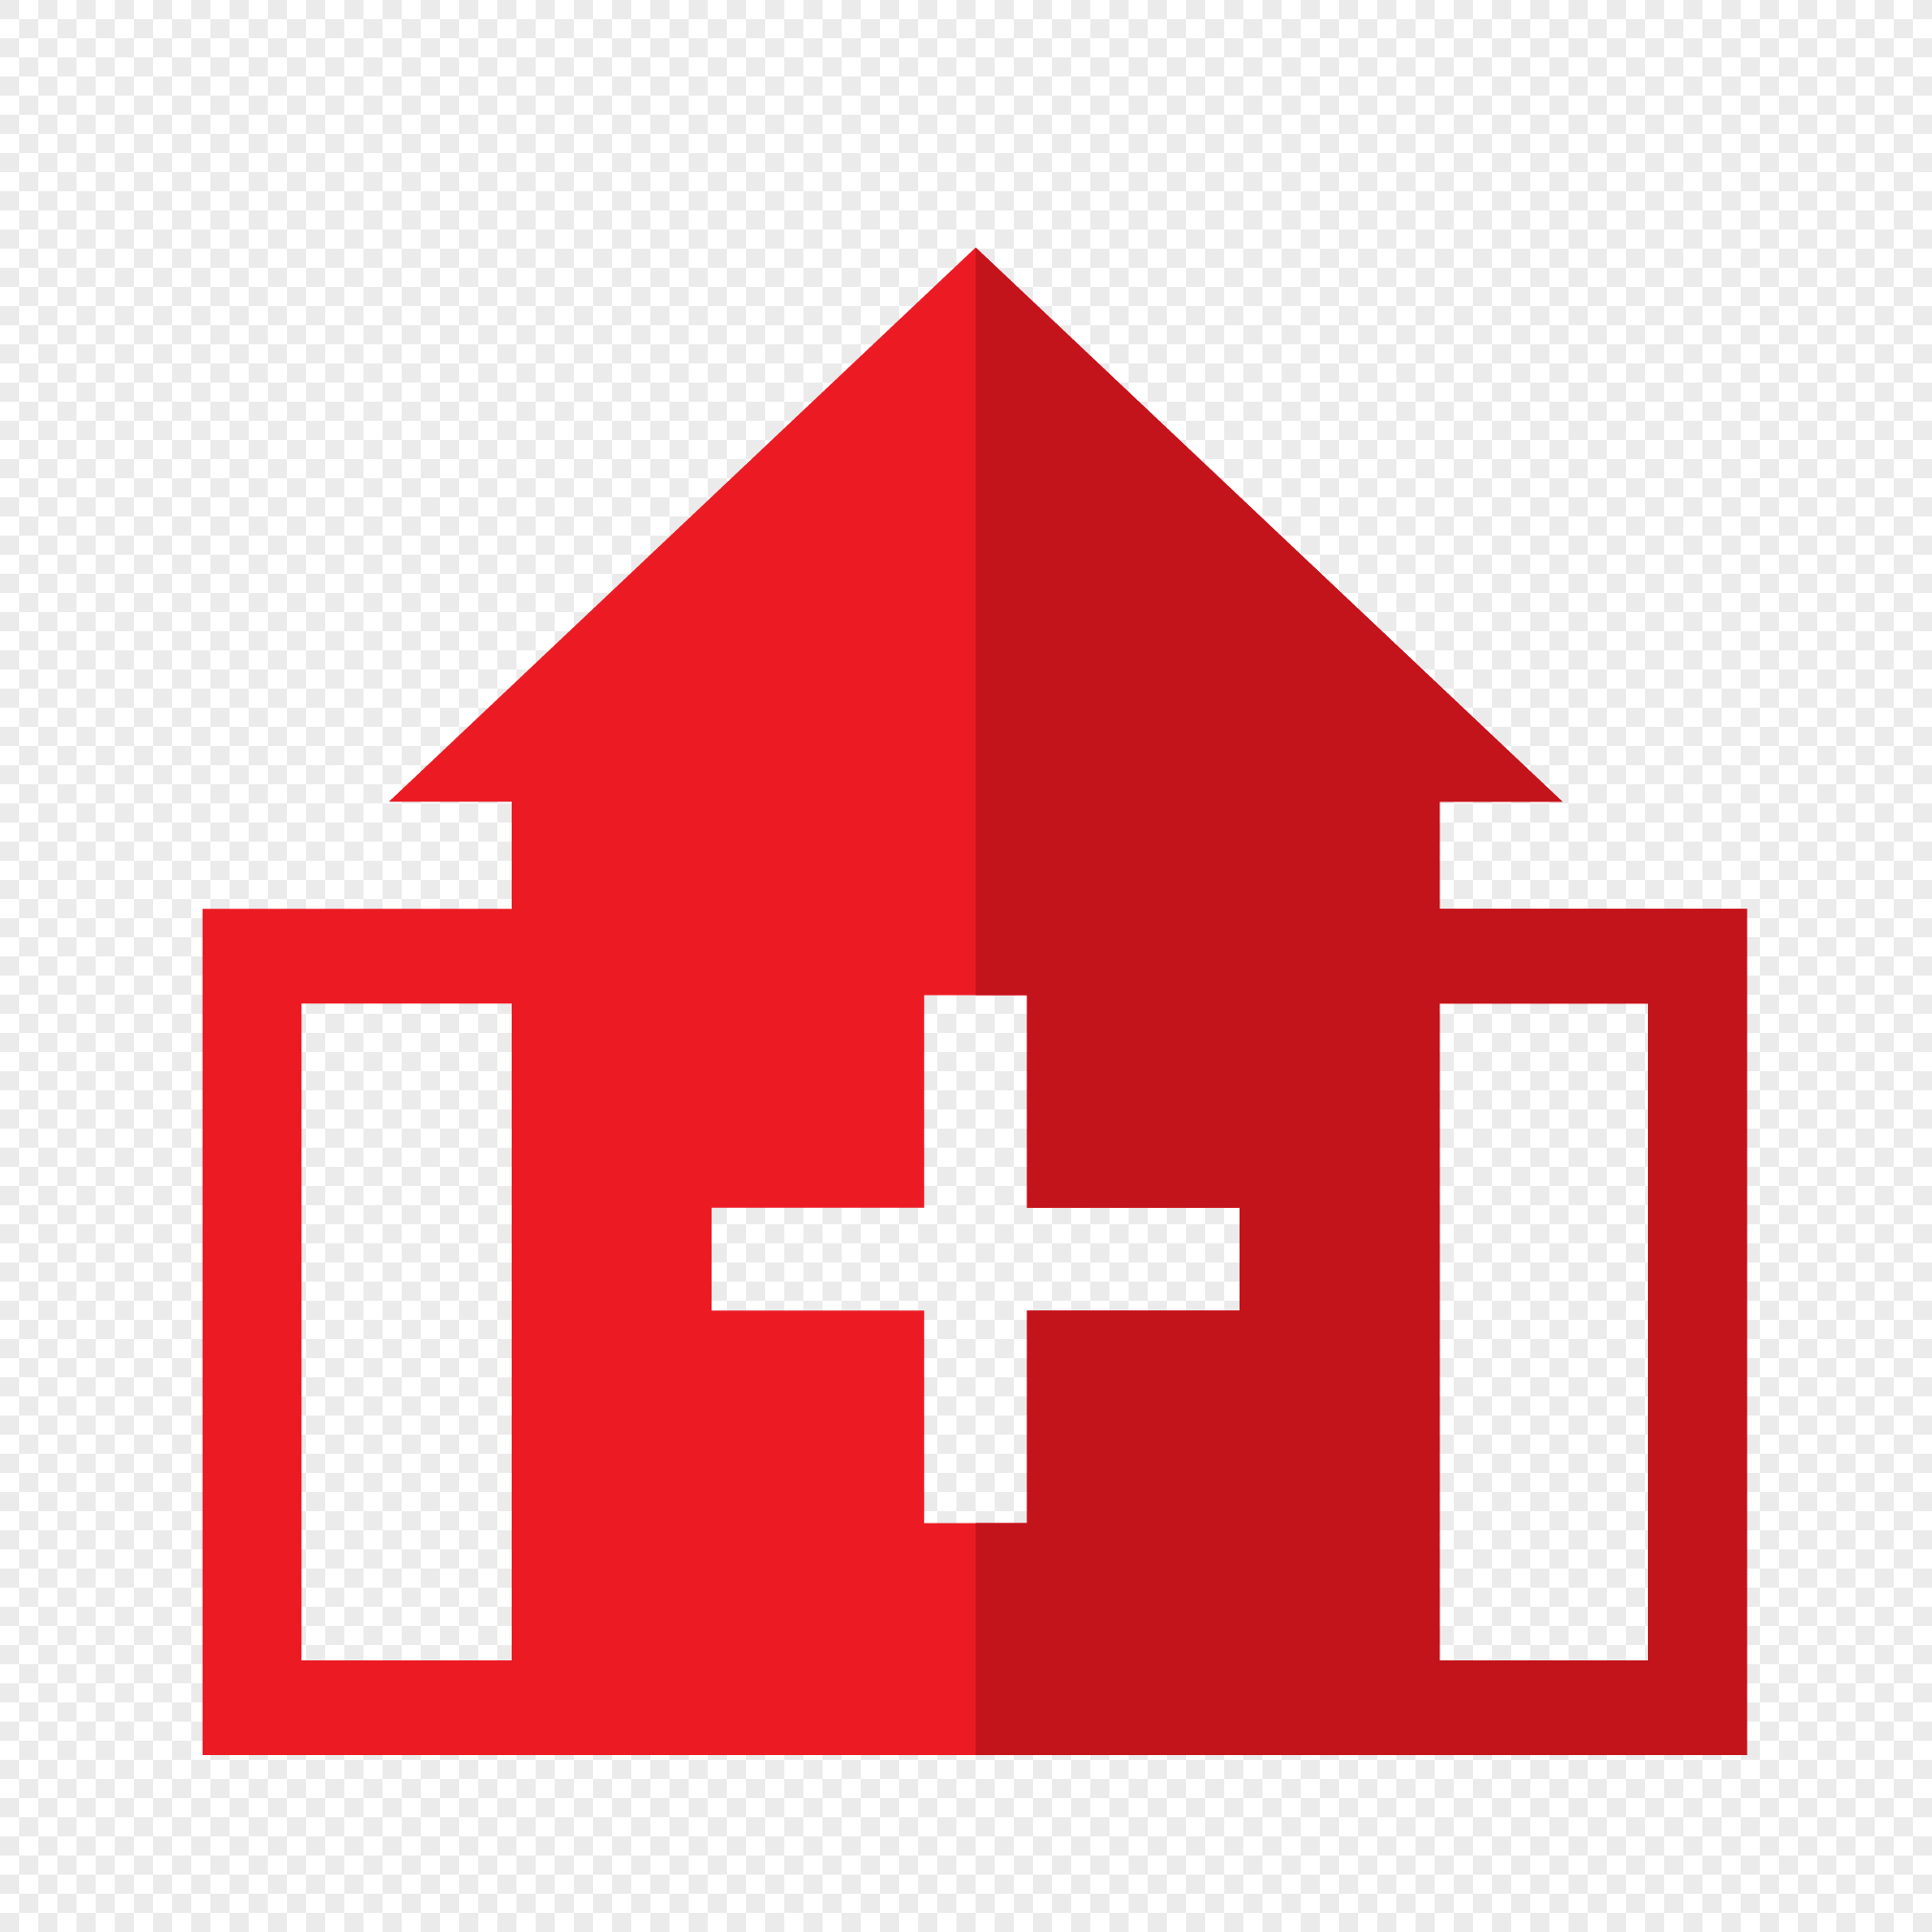 Red Hospital Logo - Red hospital logo png image_picture free download 400913521_lovepik.com